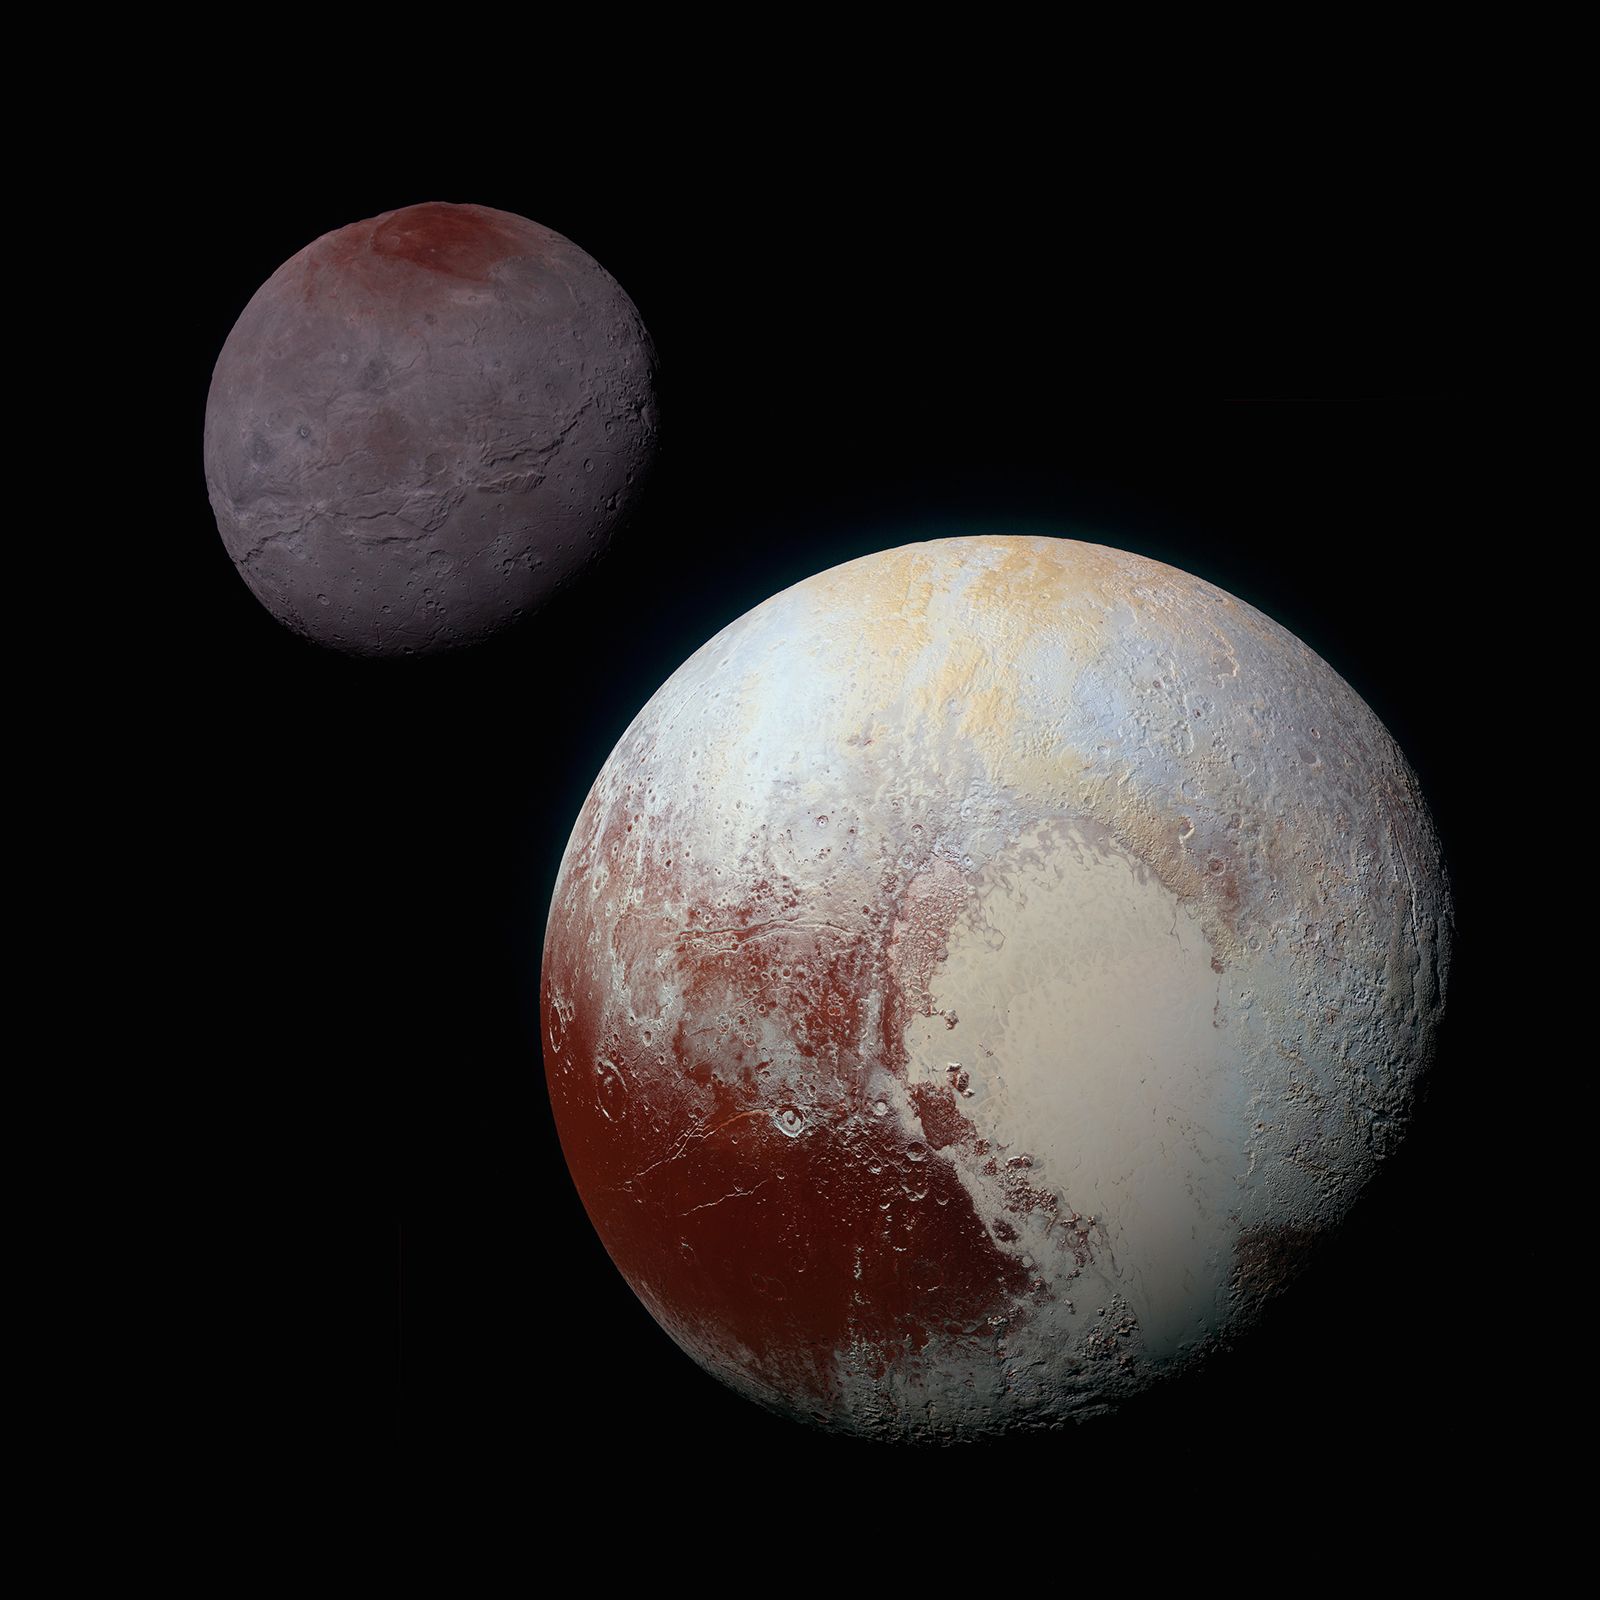 Pluto and its mood Charon